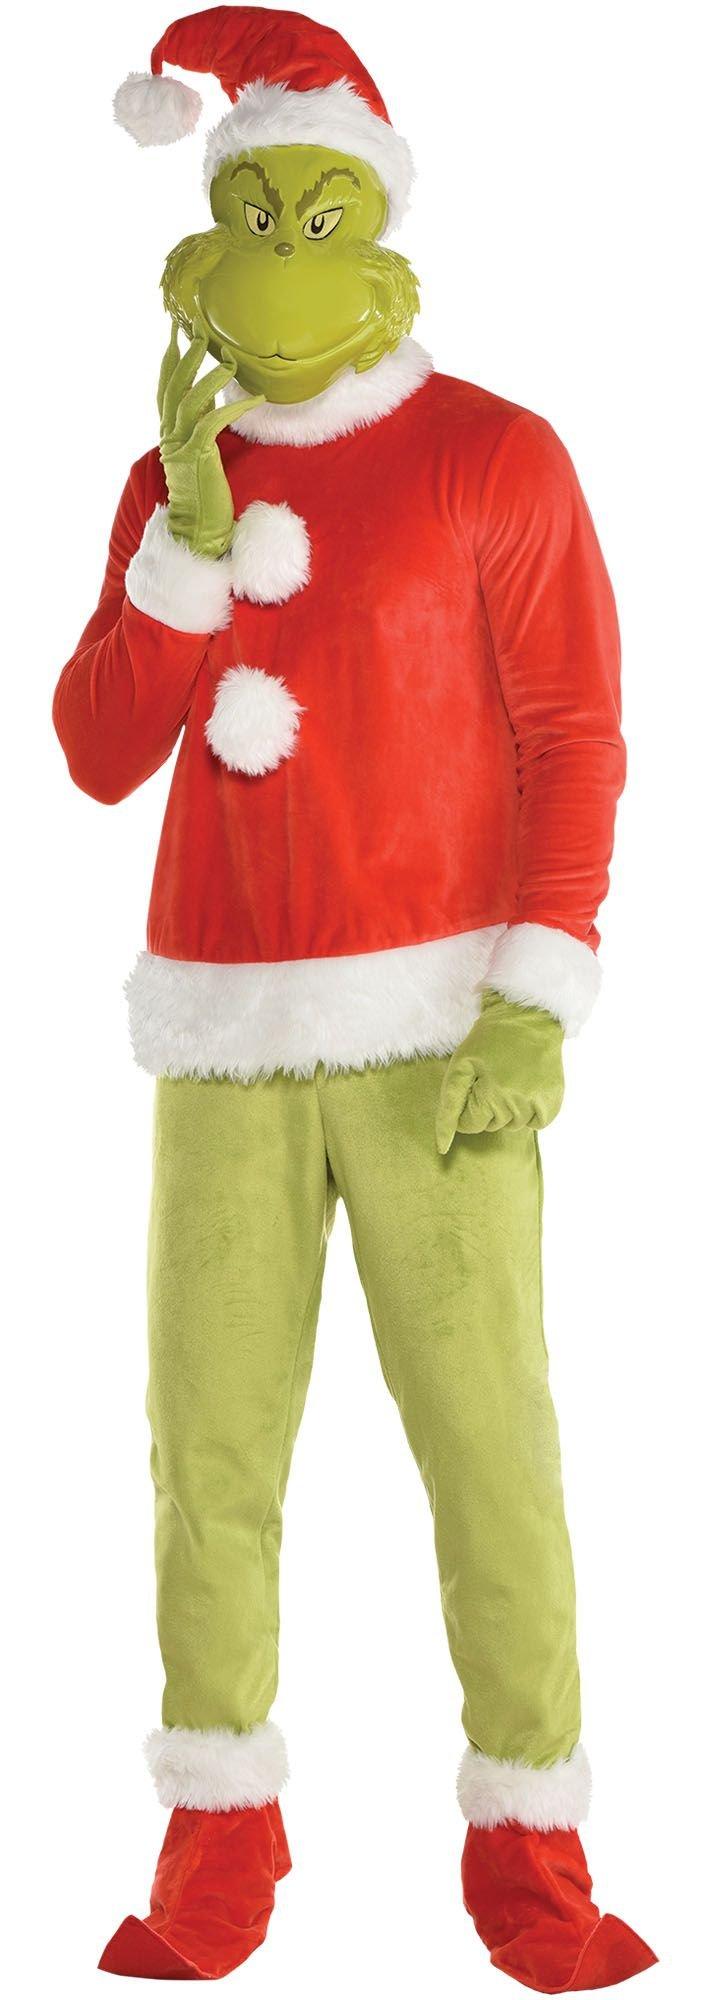 Dr. Seuss The Grinch Costume Kit, Standard